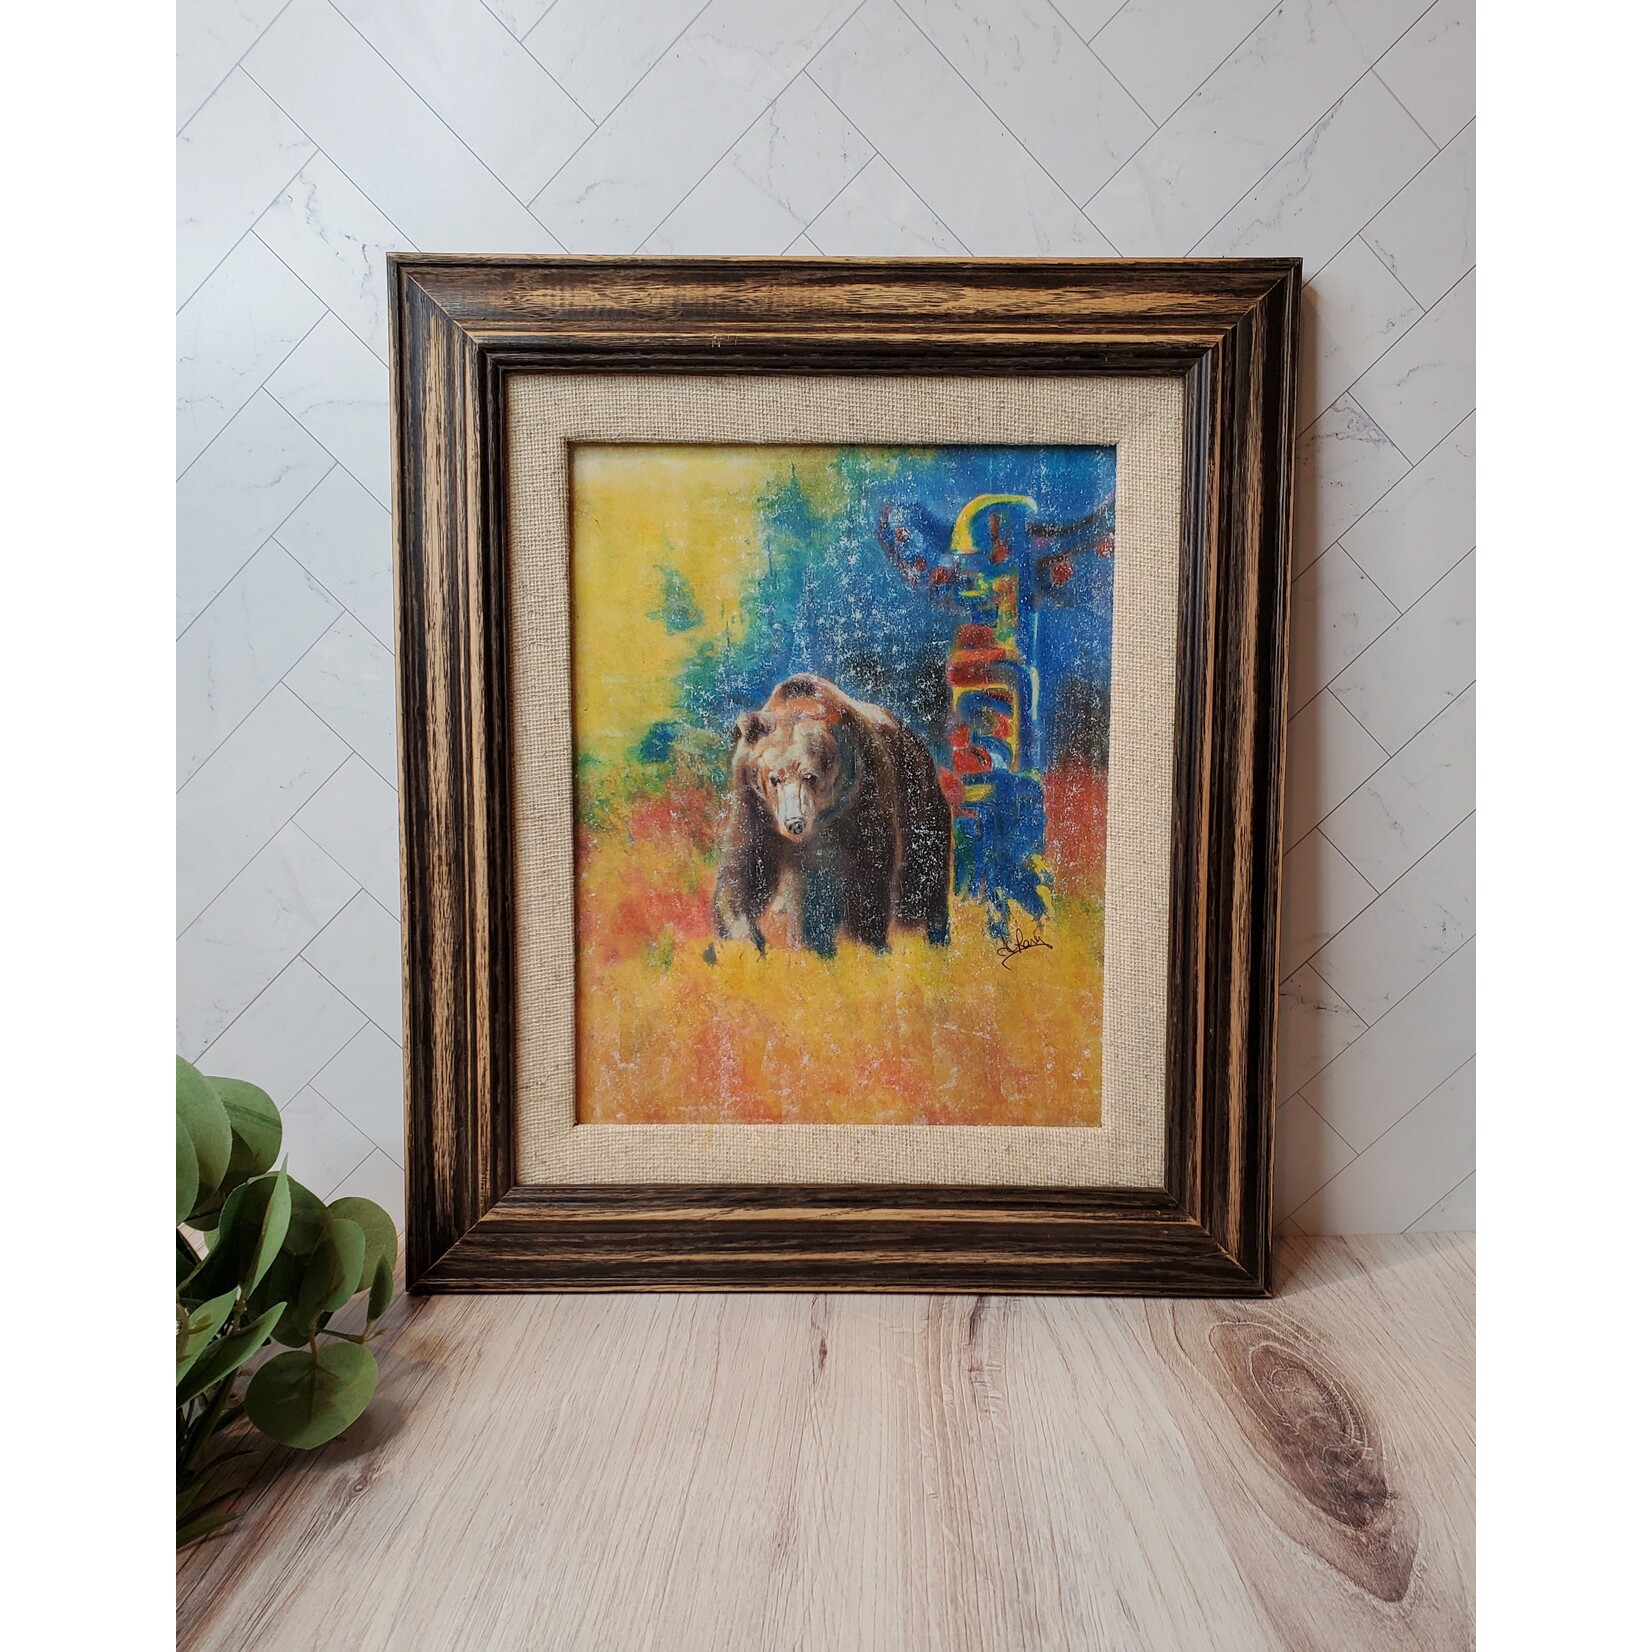 Anastiscia Chantler-Lang "Bear Totem" - original pastel - framed